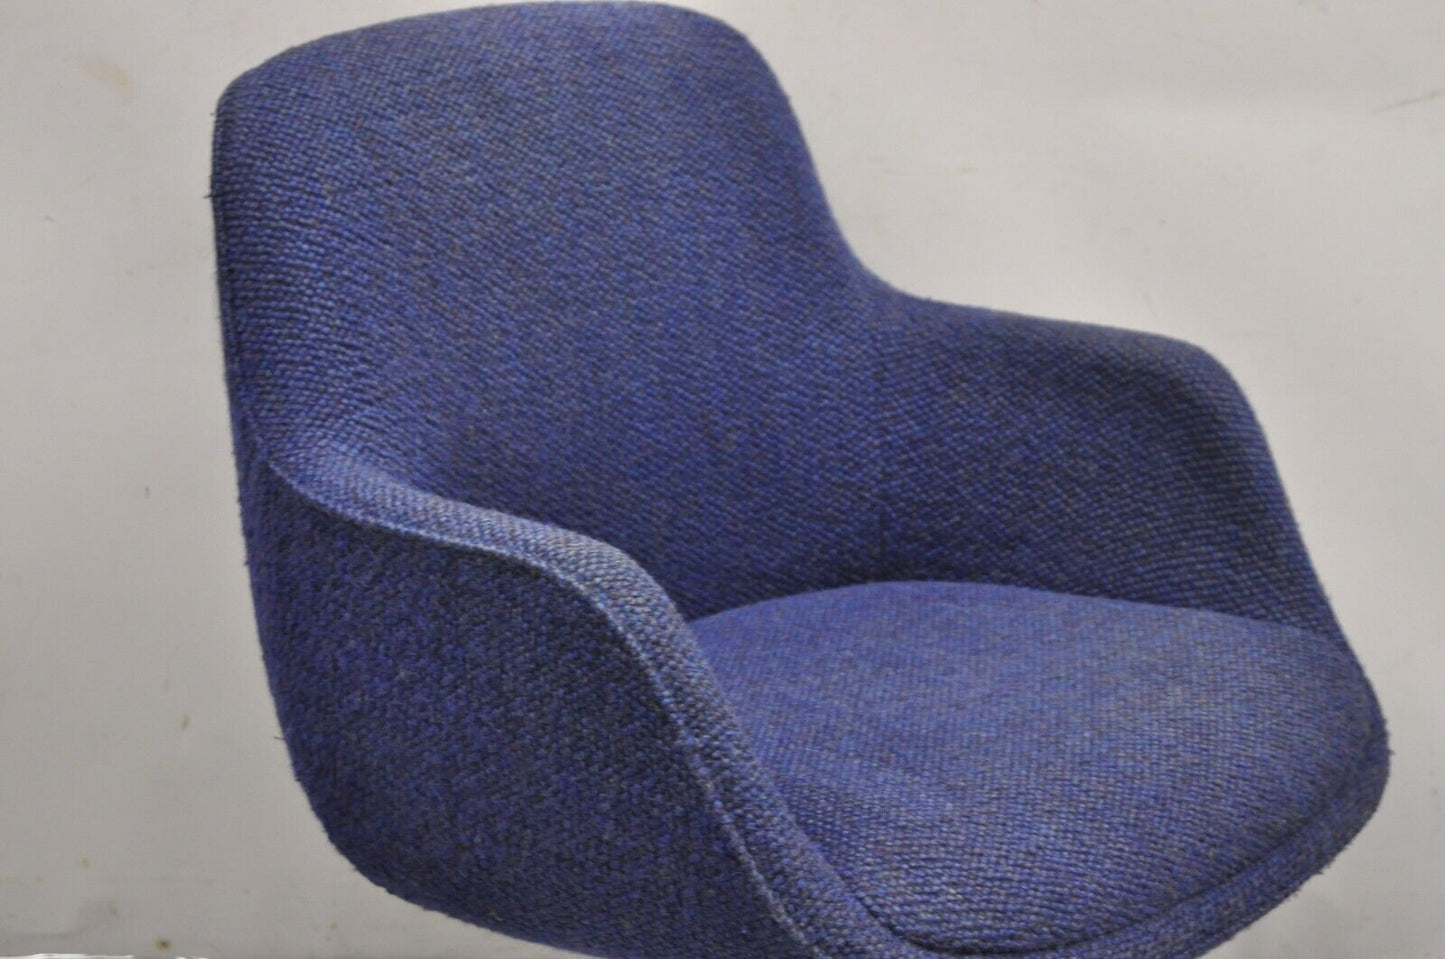 Vintage Mid Century Modern Blue Upholstered Chrome Swivel Base Club Arm Chair